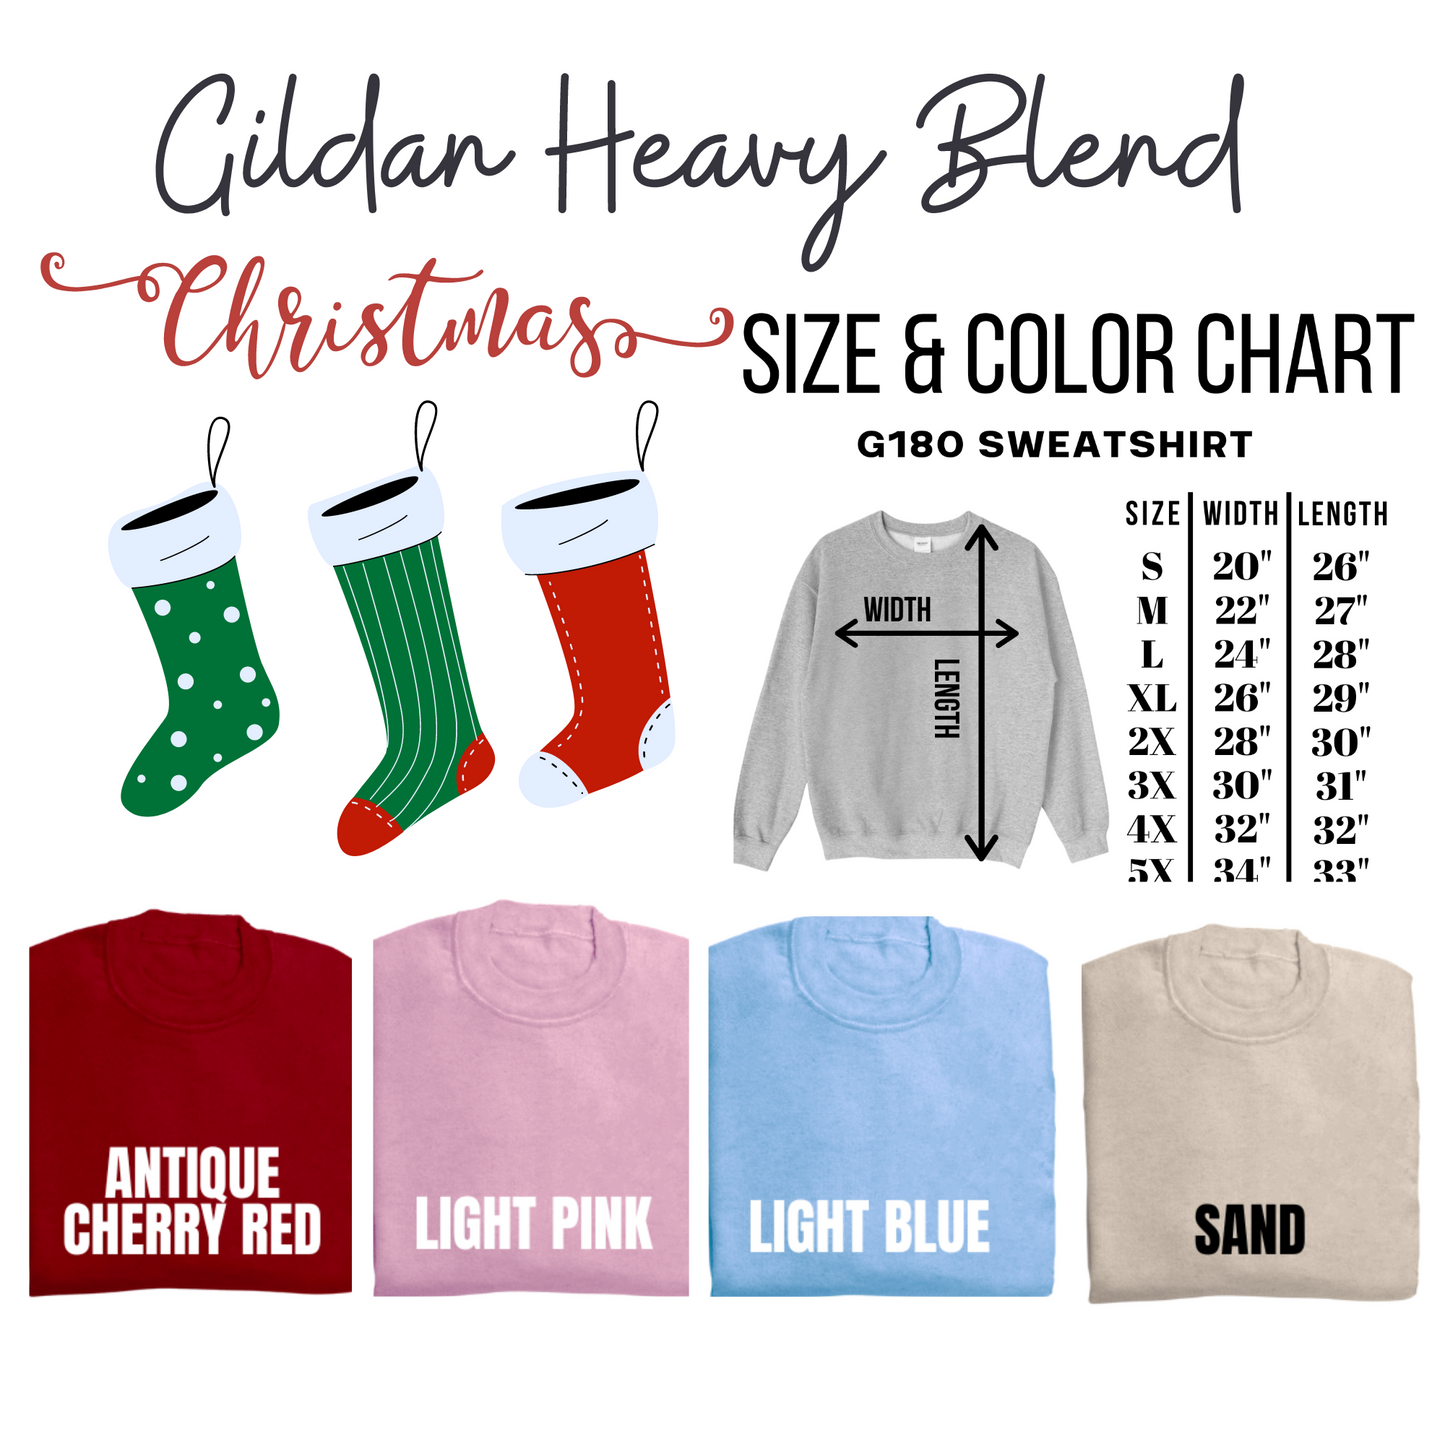 Tis' the Season W/Sleeve Print Gildan Heavy Blend Sweatshirt